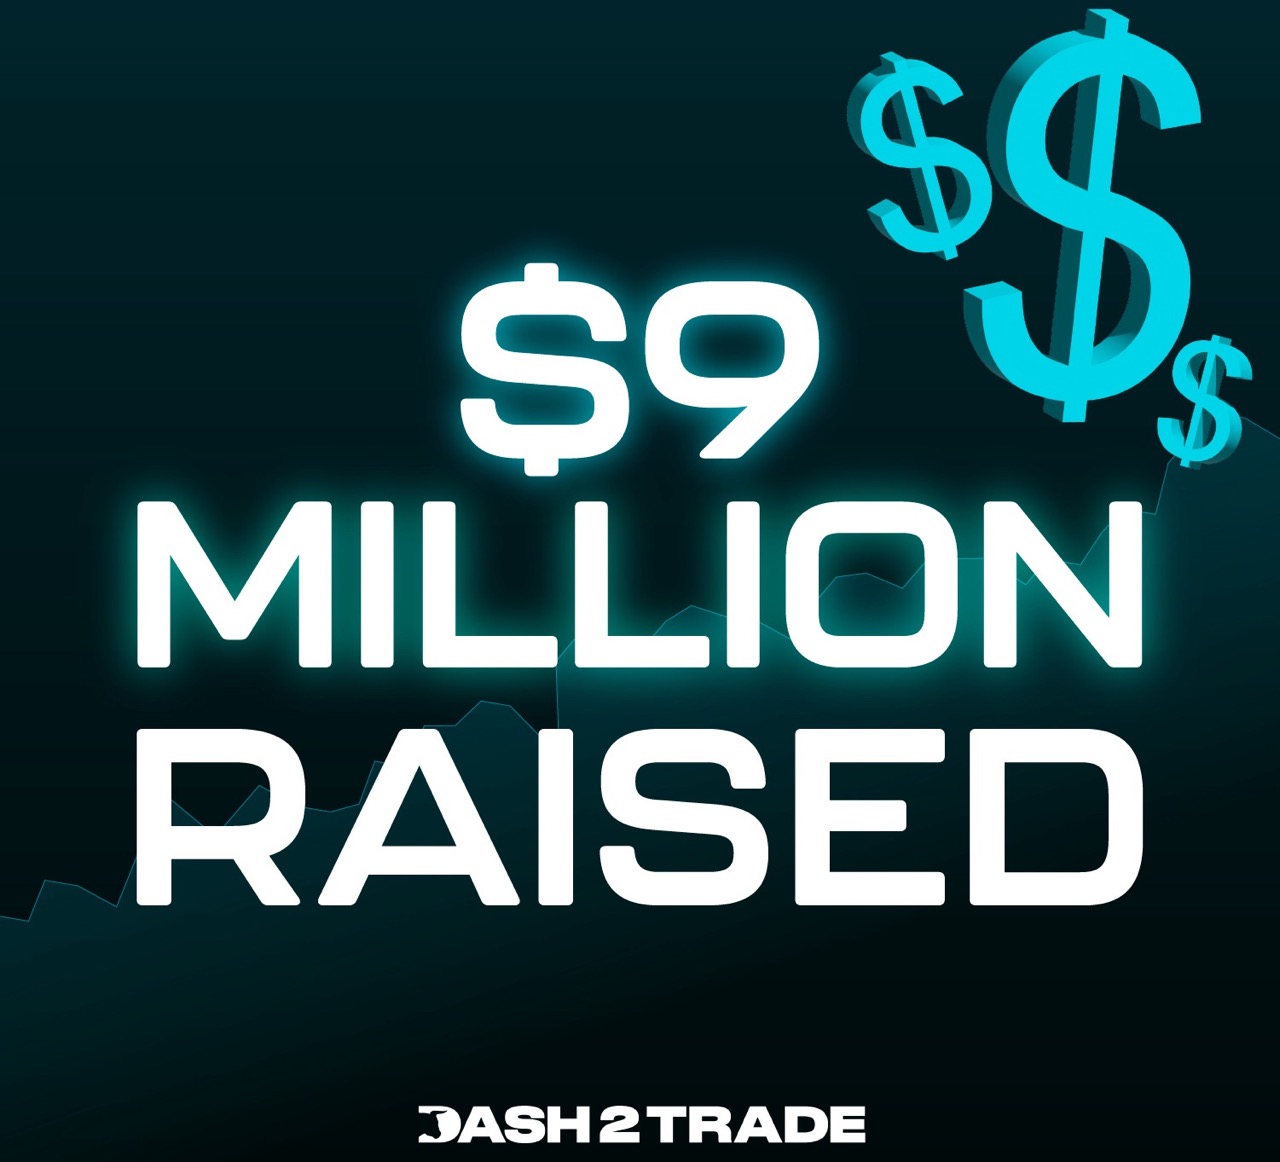 Dash 2 Trade 9 Million